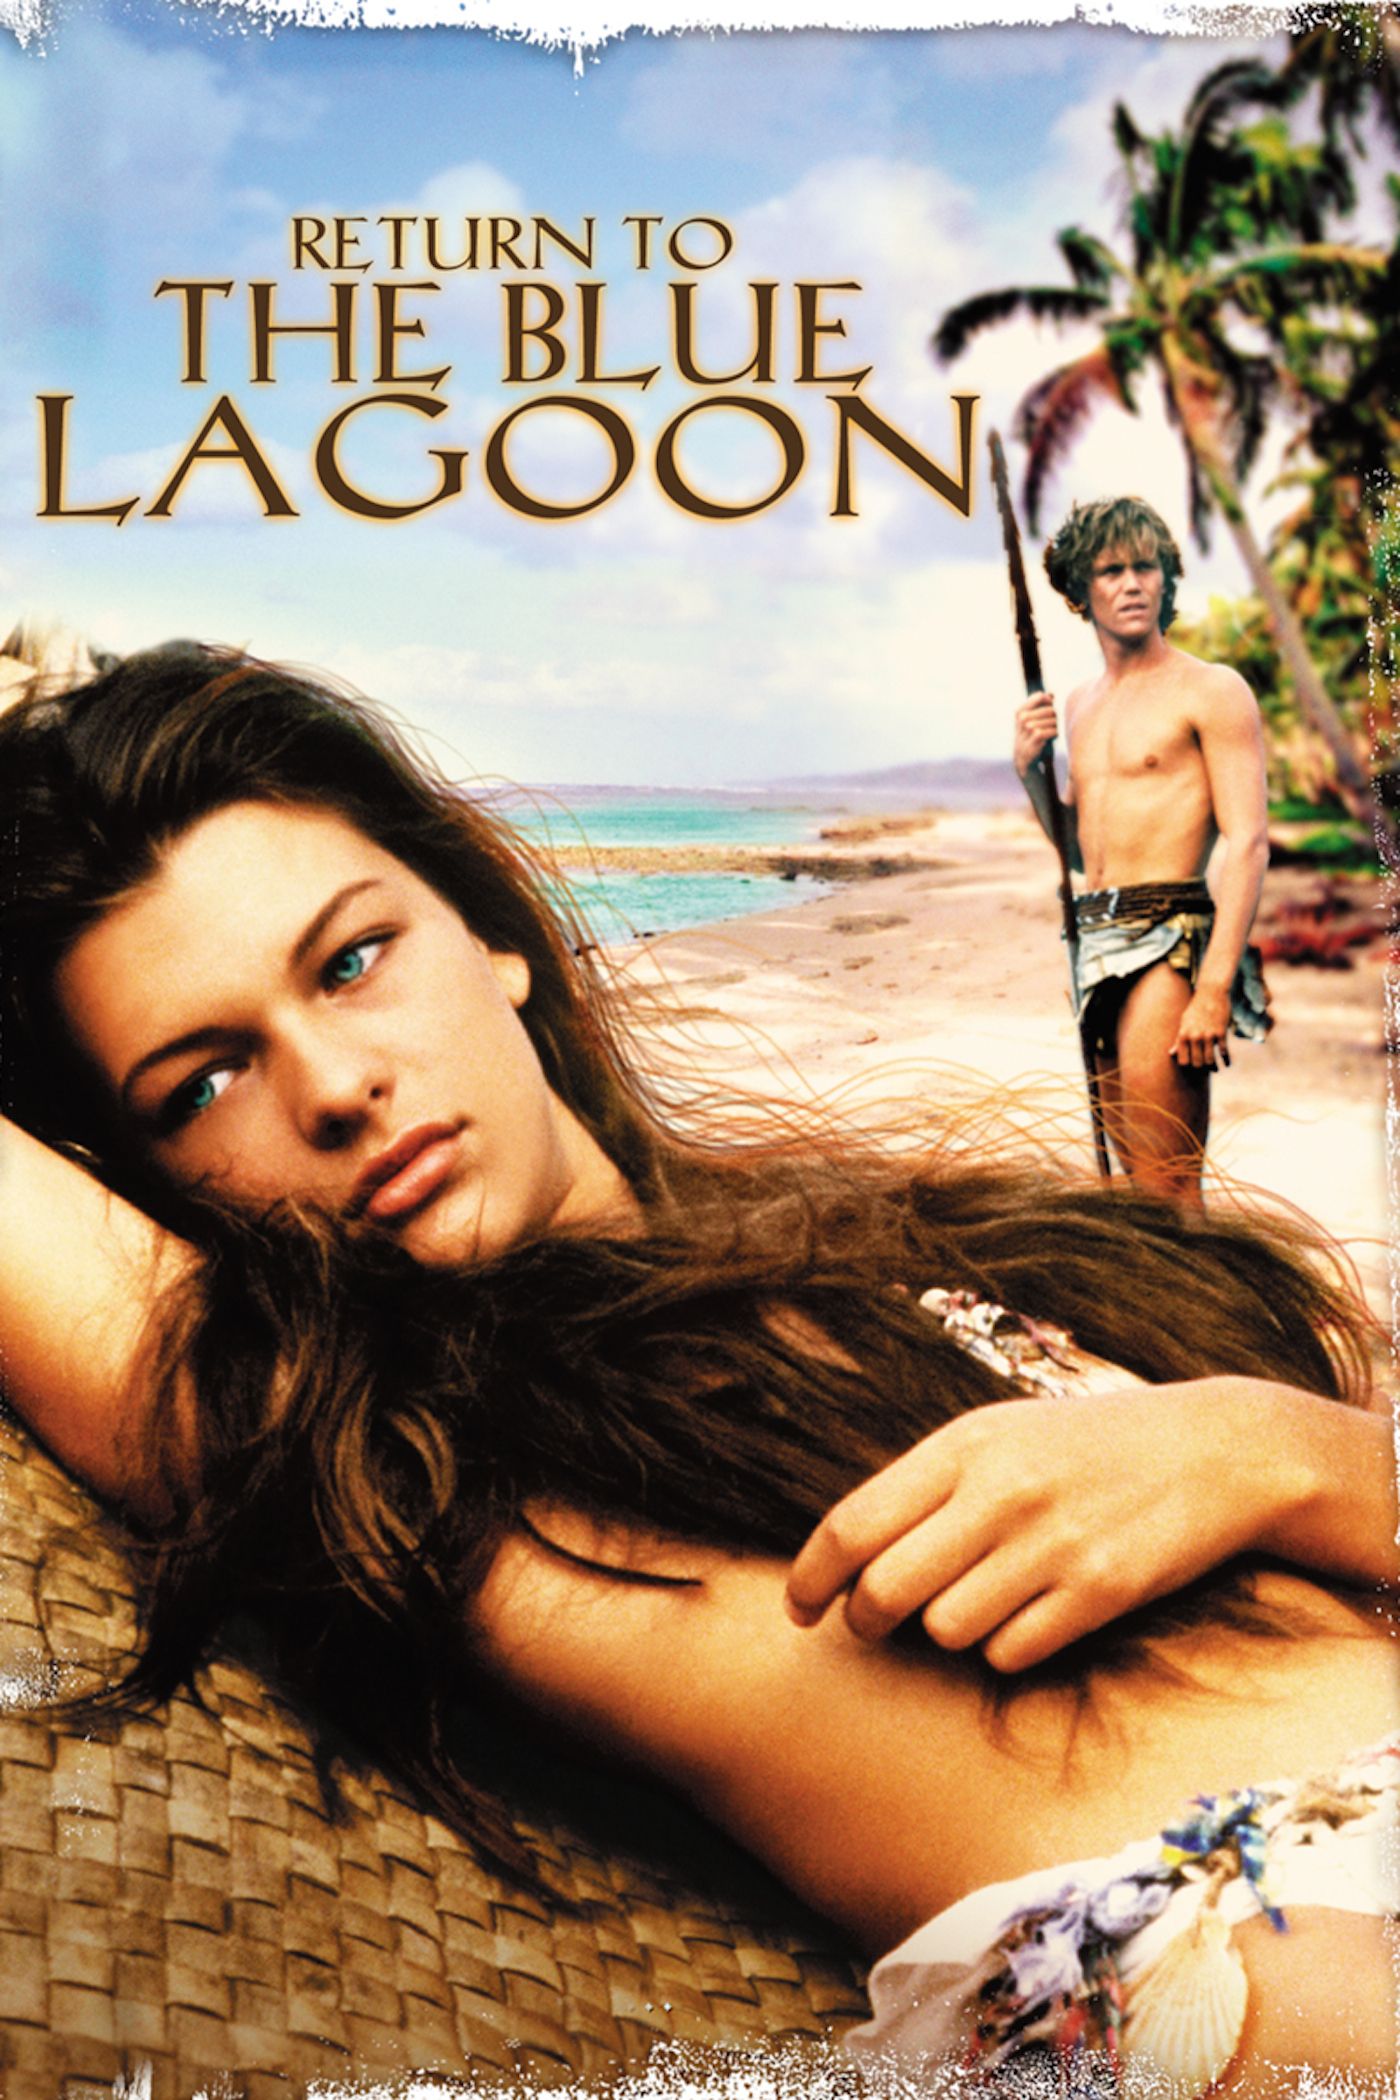 Return To The Blue Lagoon | Full Movie | Movies Anywhere